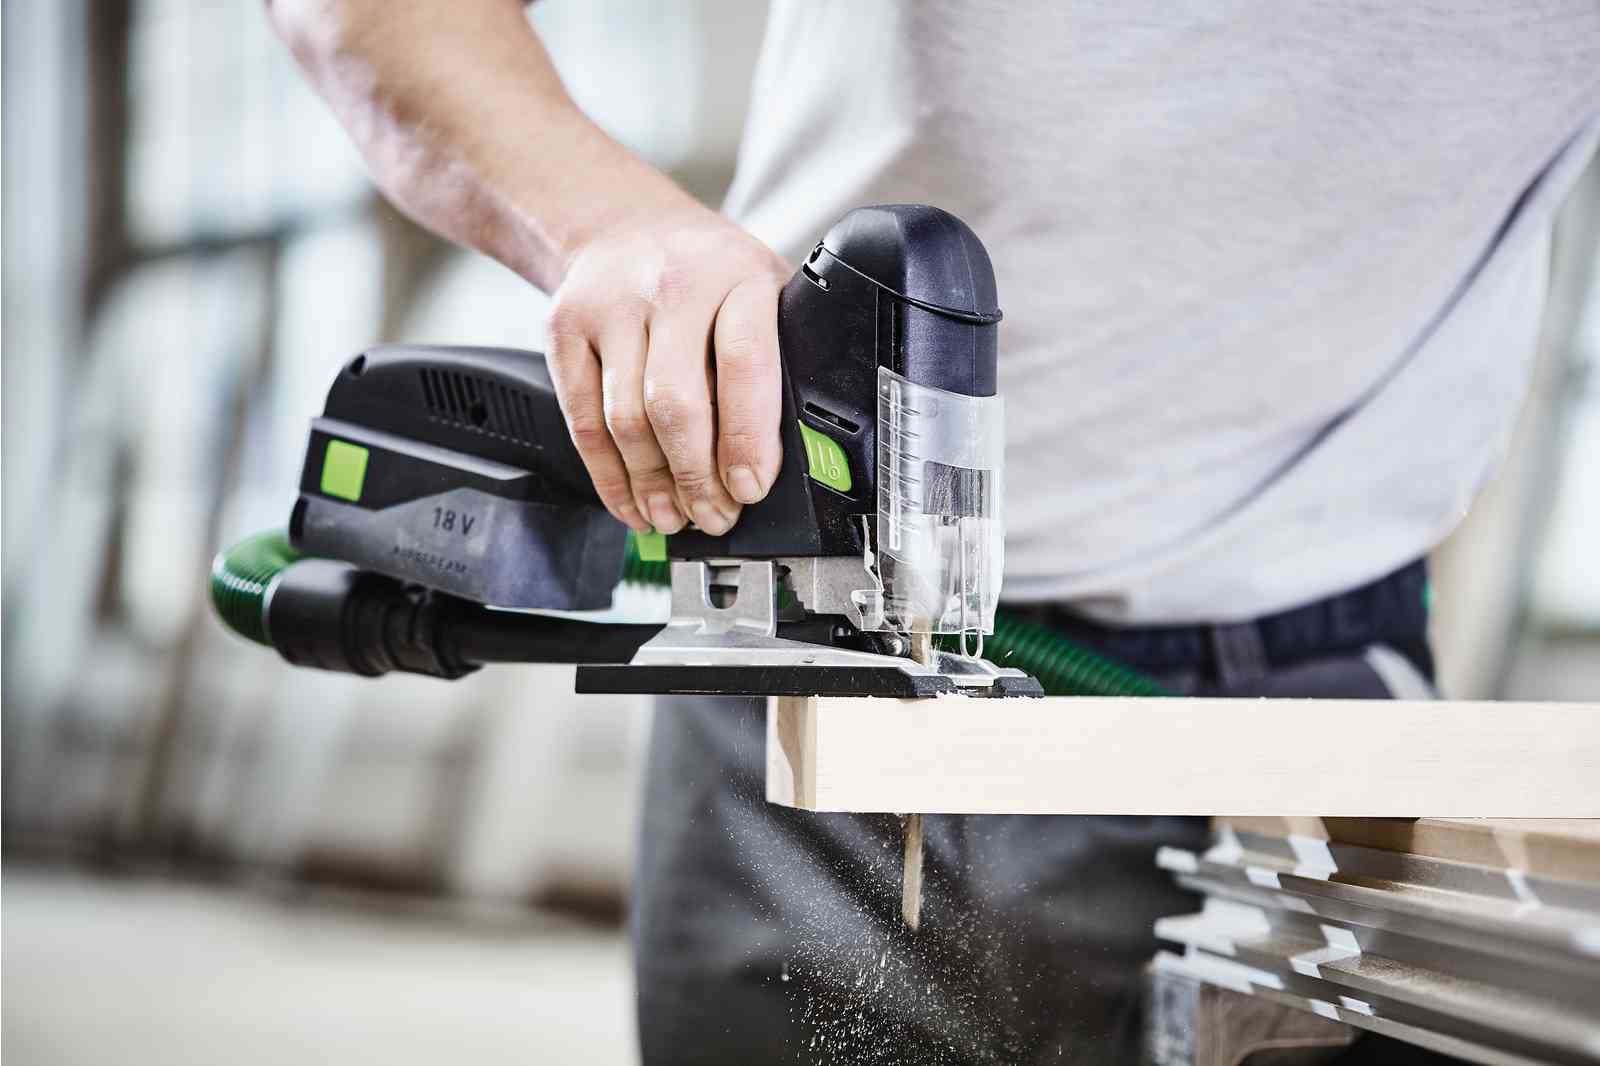 Festool Power Tools for Finish Carpentry